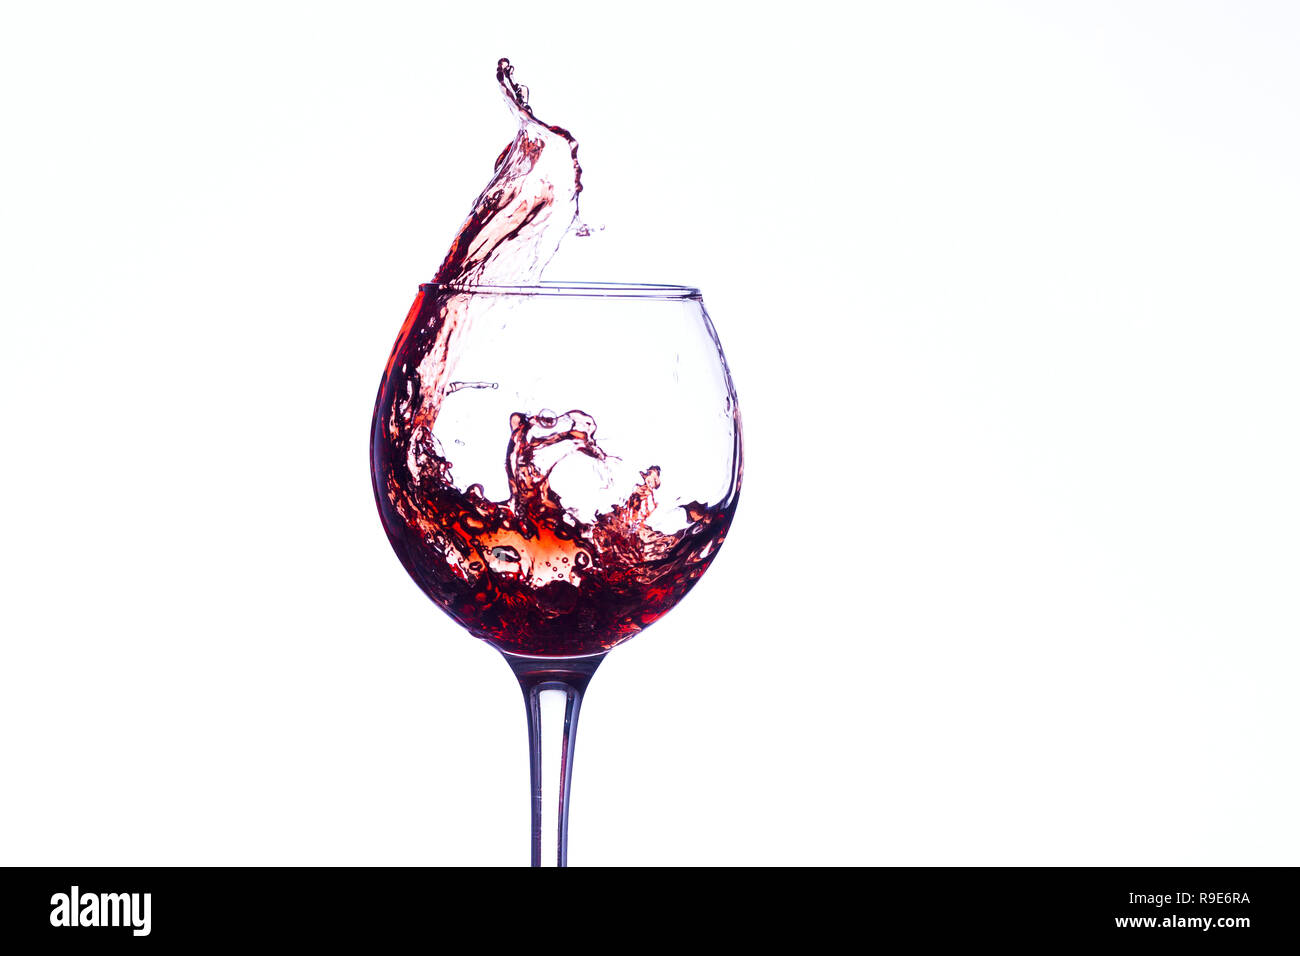 Wine splashing in glass, acrylic background, studio lighting Stock Photo